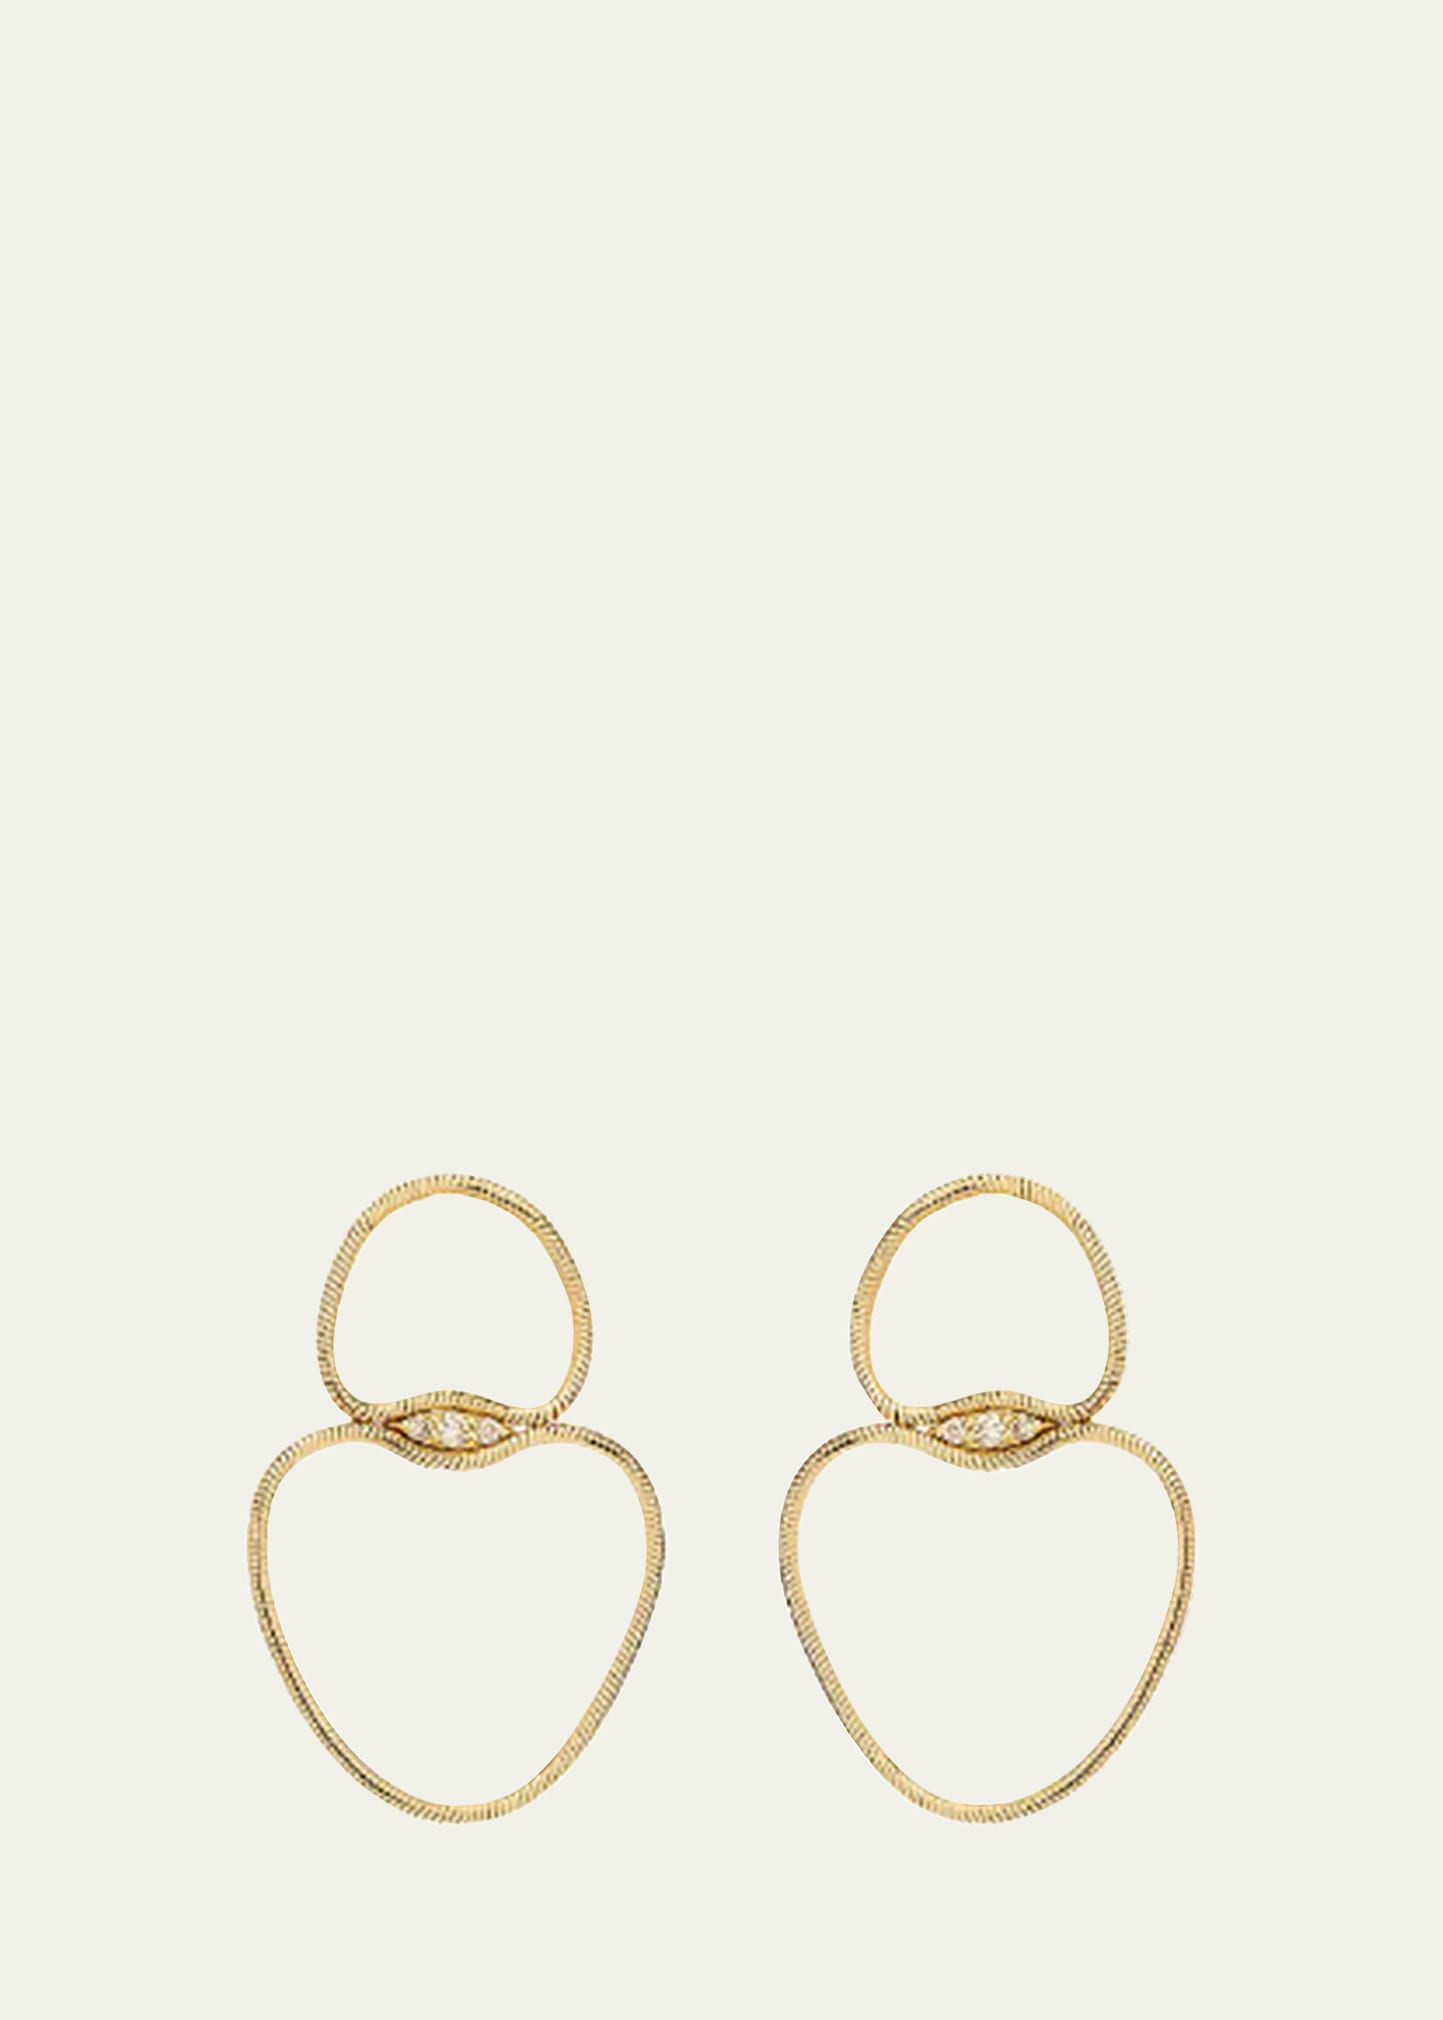 Fernando Jorge 18k Yellow Gold Small Diamond Chain Earrings